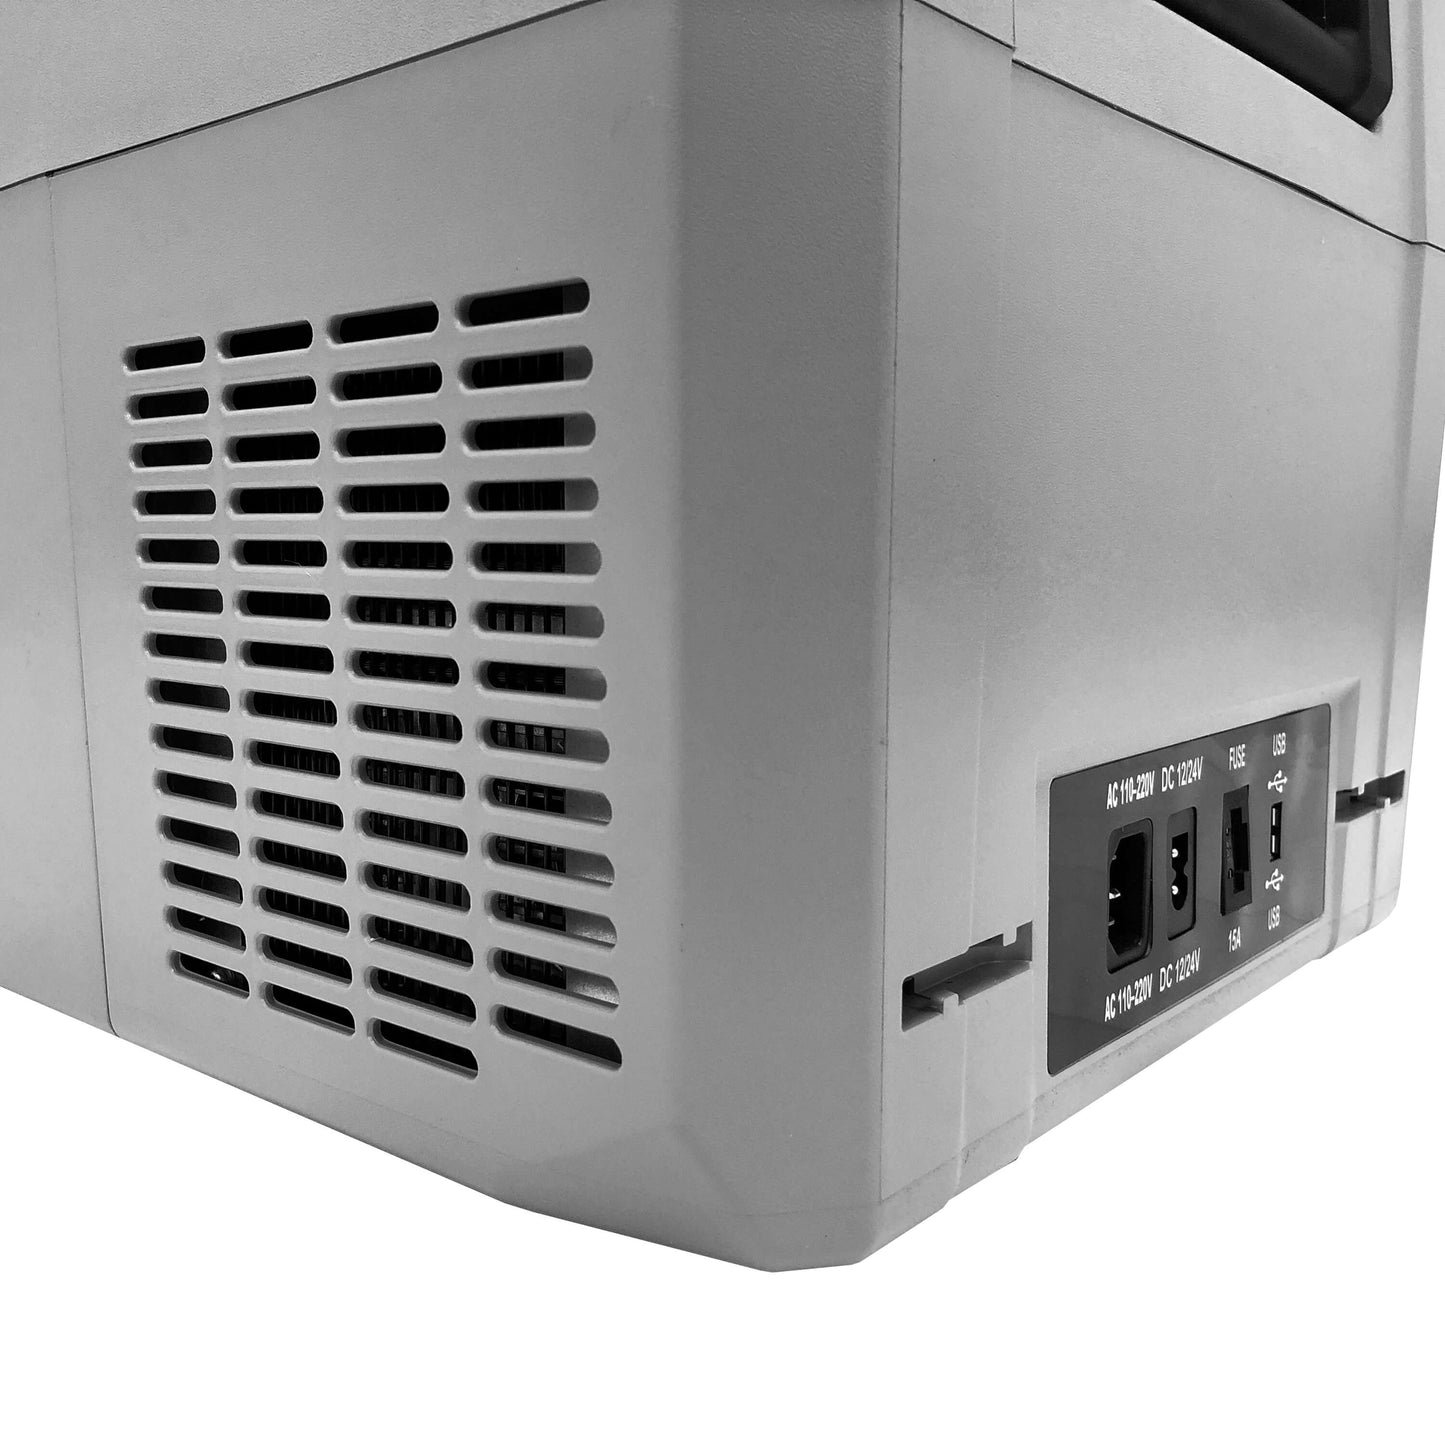 Whynter Freezer Whynter FMC-350XP 34 Quart Compact Portable Freezer Refrigerator with 12v DC Option